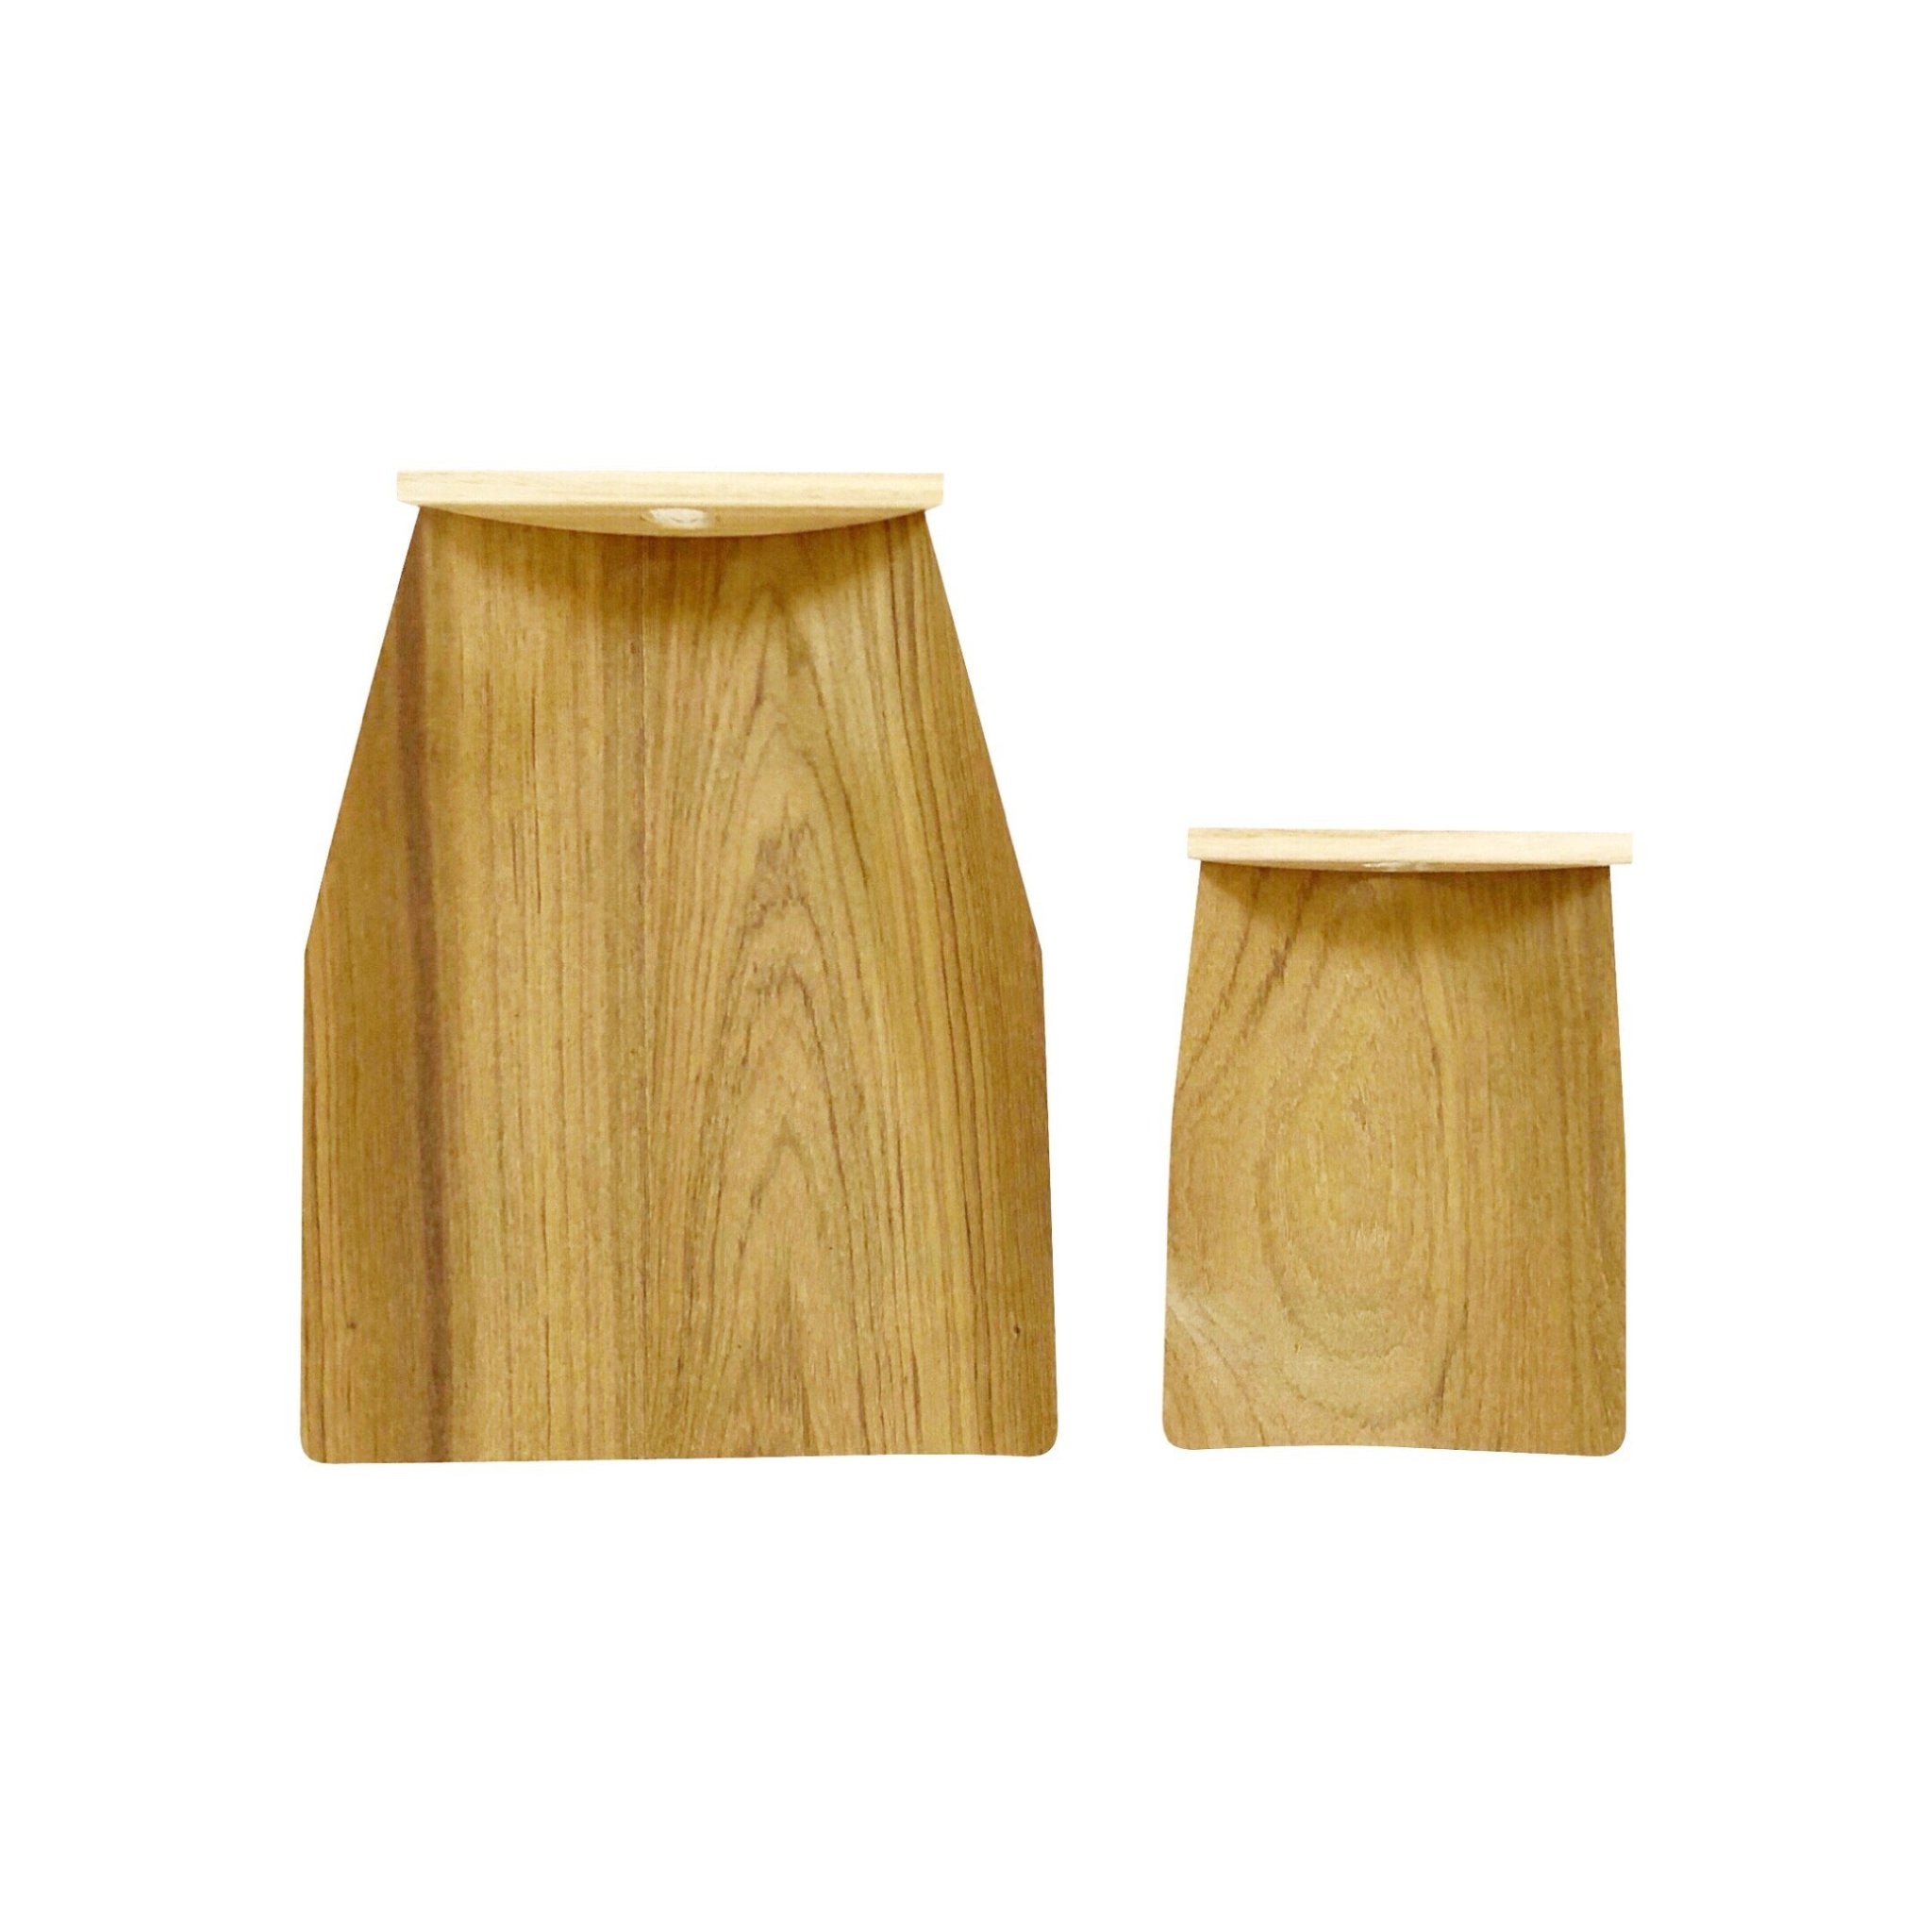 wood-dustpan-294294.jpg